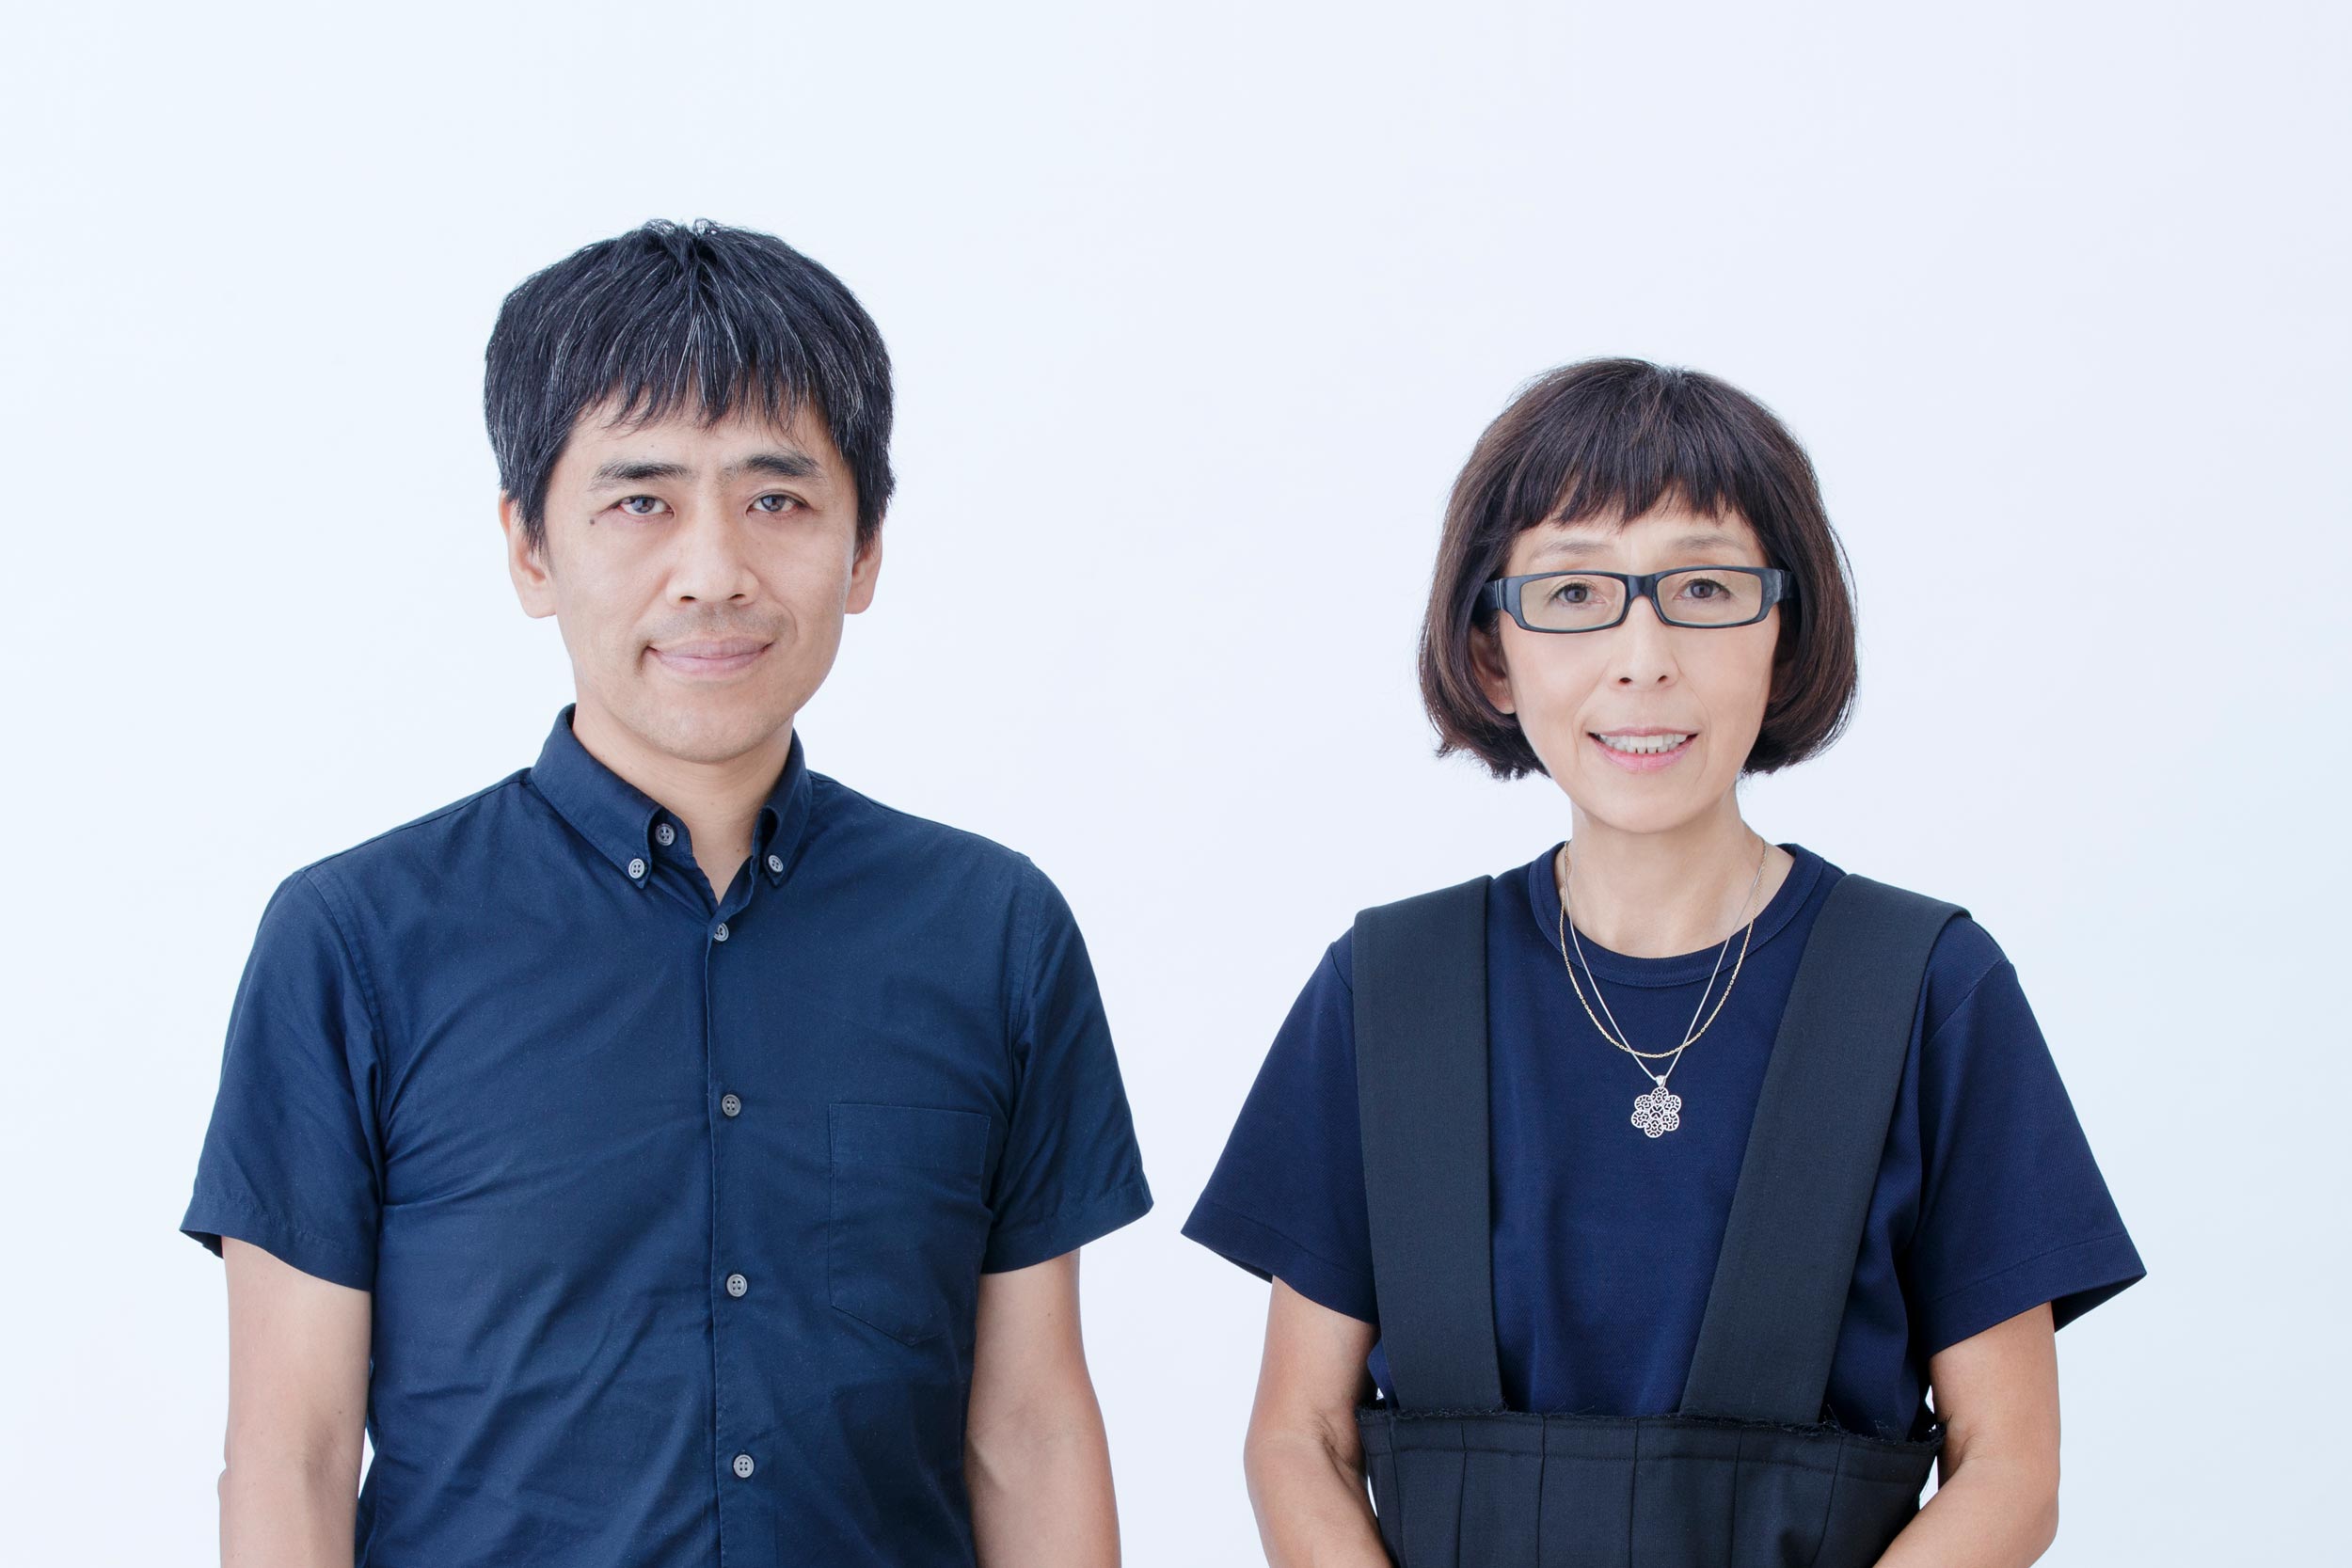 Ryue Nishizawa, left, and Kazuyo Sejima  stand together for a picture